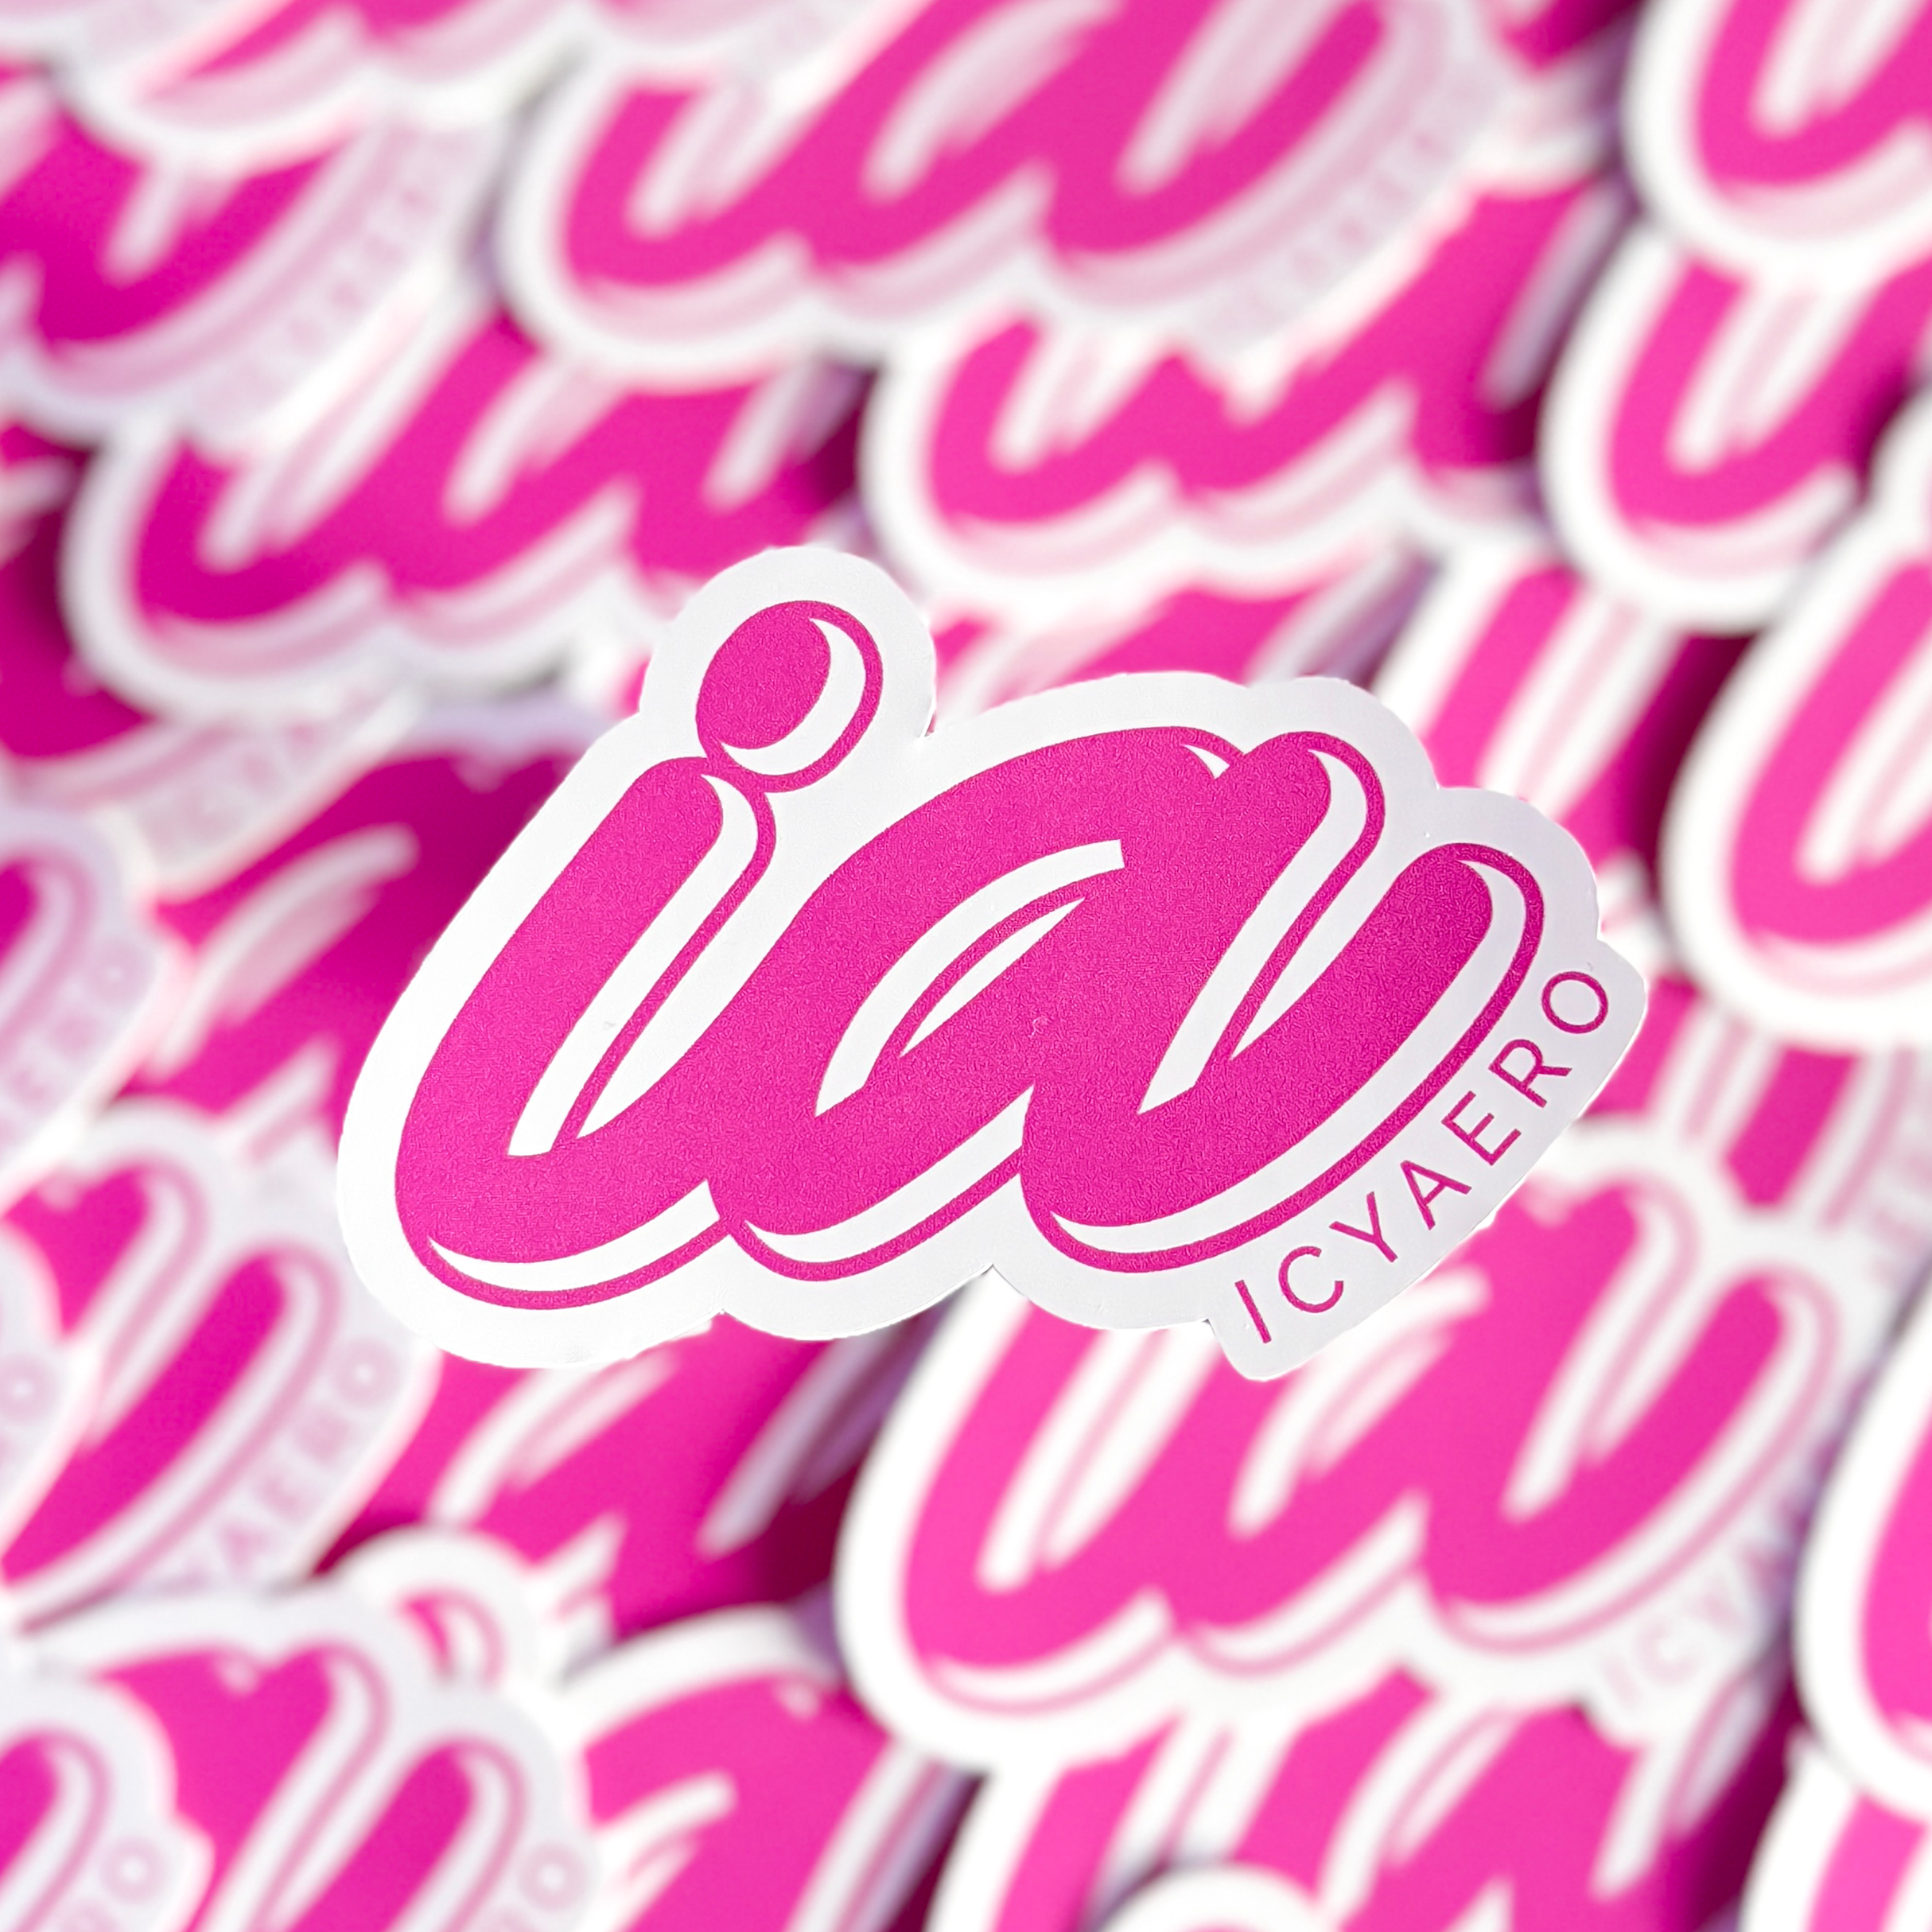 Icyaero "Flow" Sticker - Pink